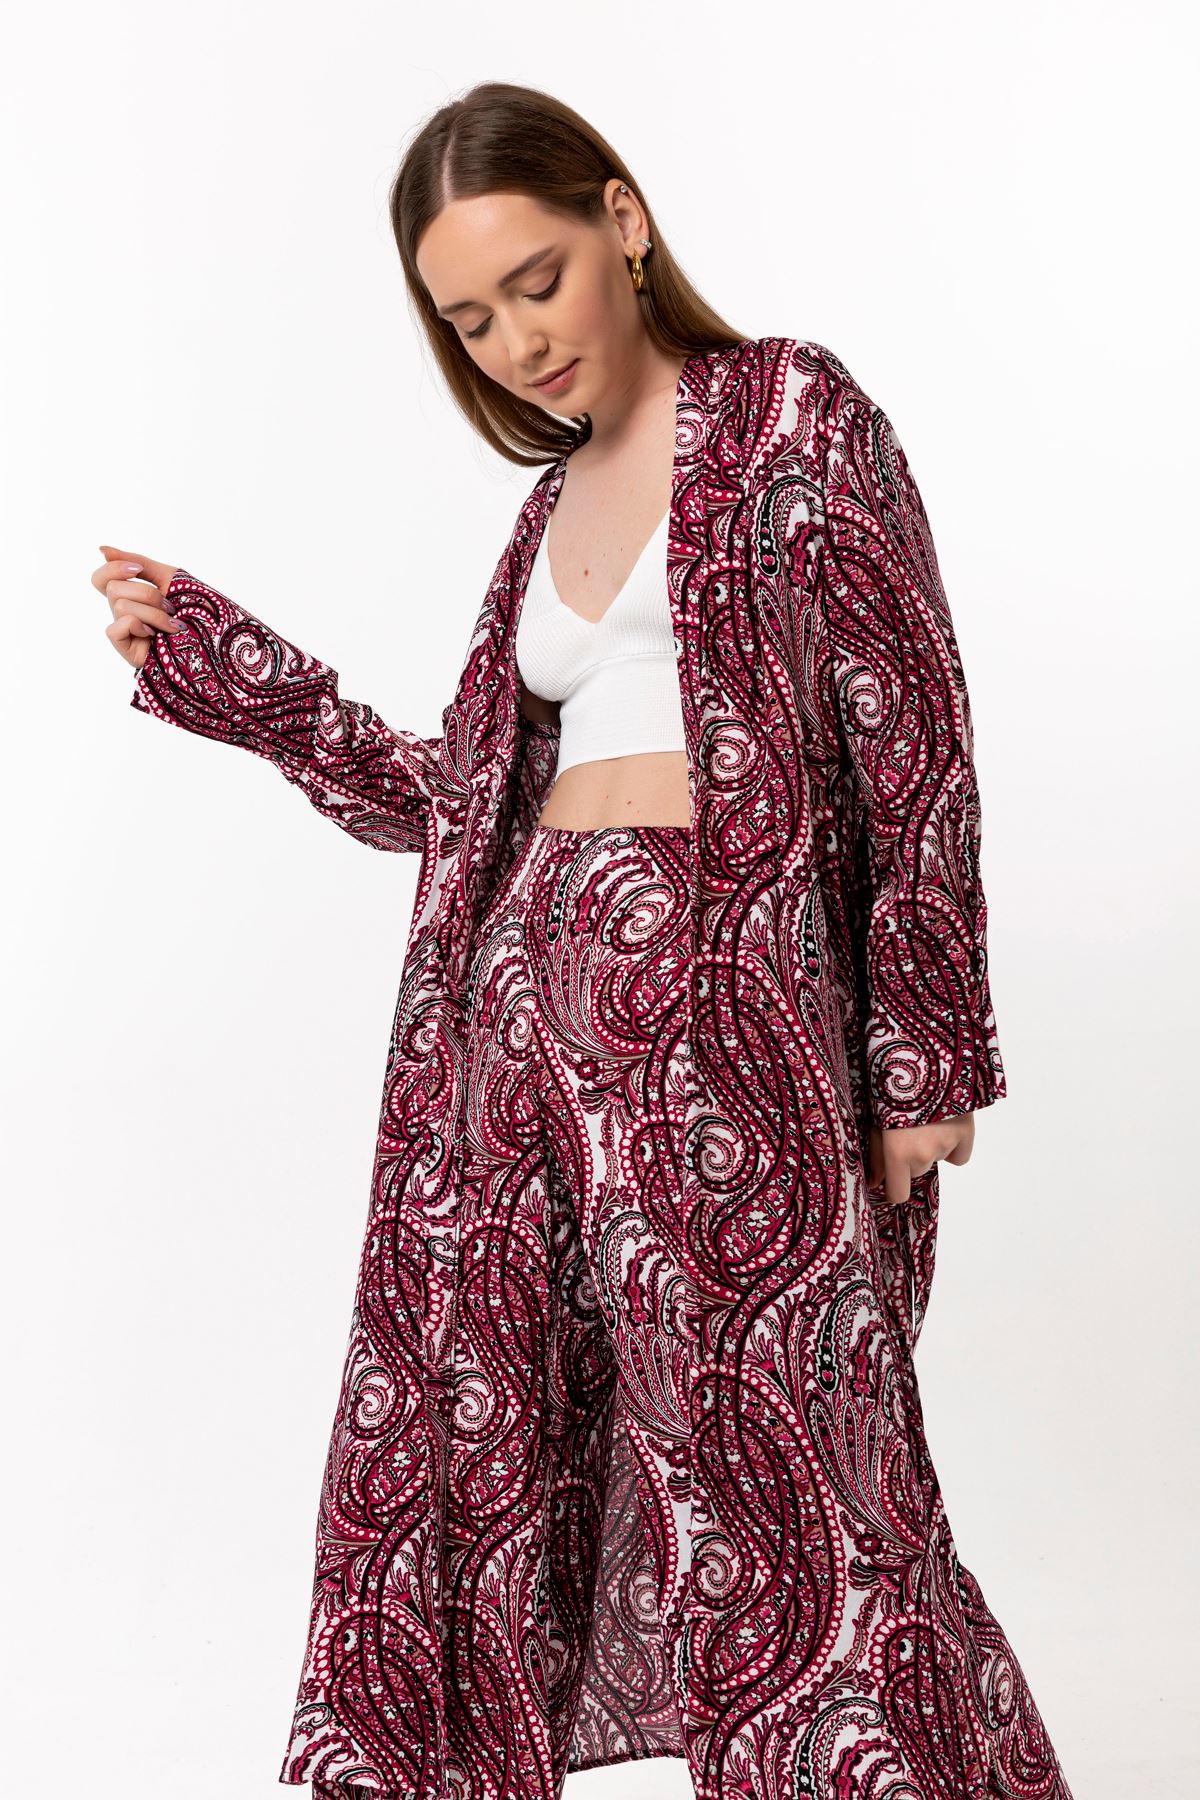 Viscose Fabric Long Sleeve Without Collar Wide Ethnic Print Women Kimono - Pink